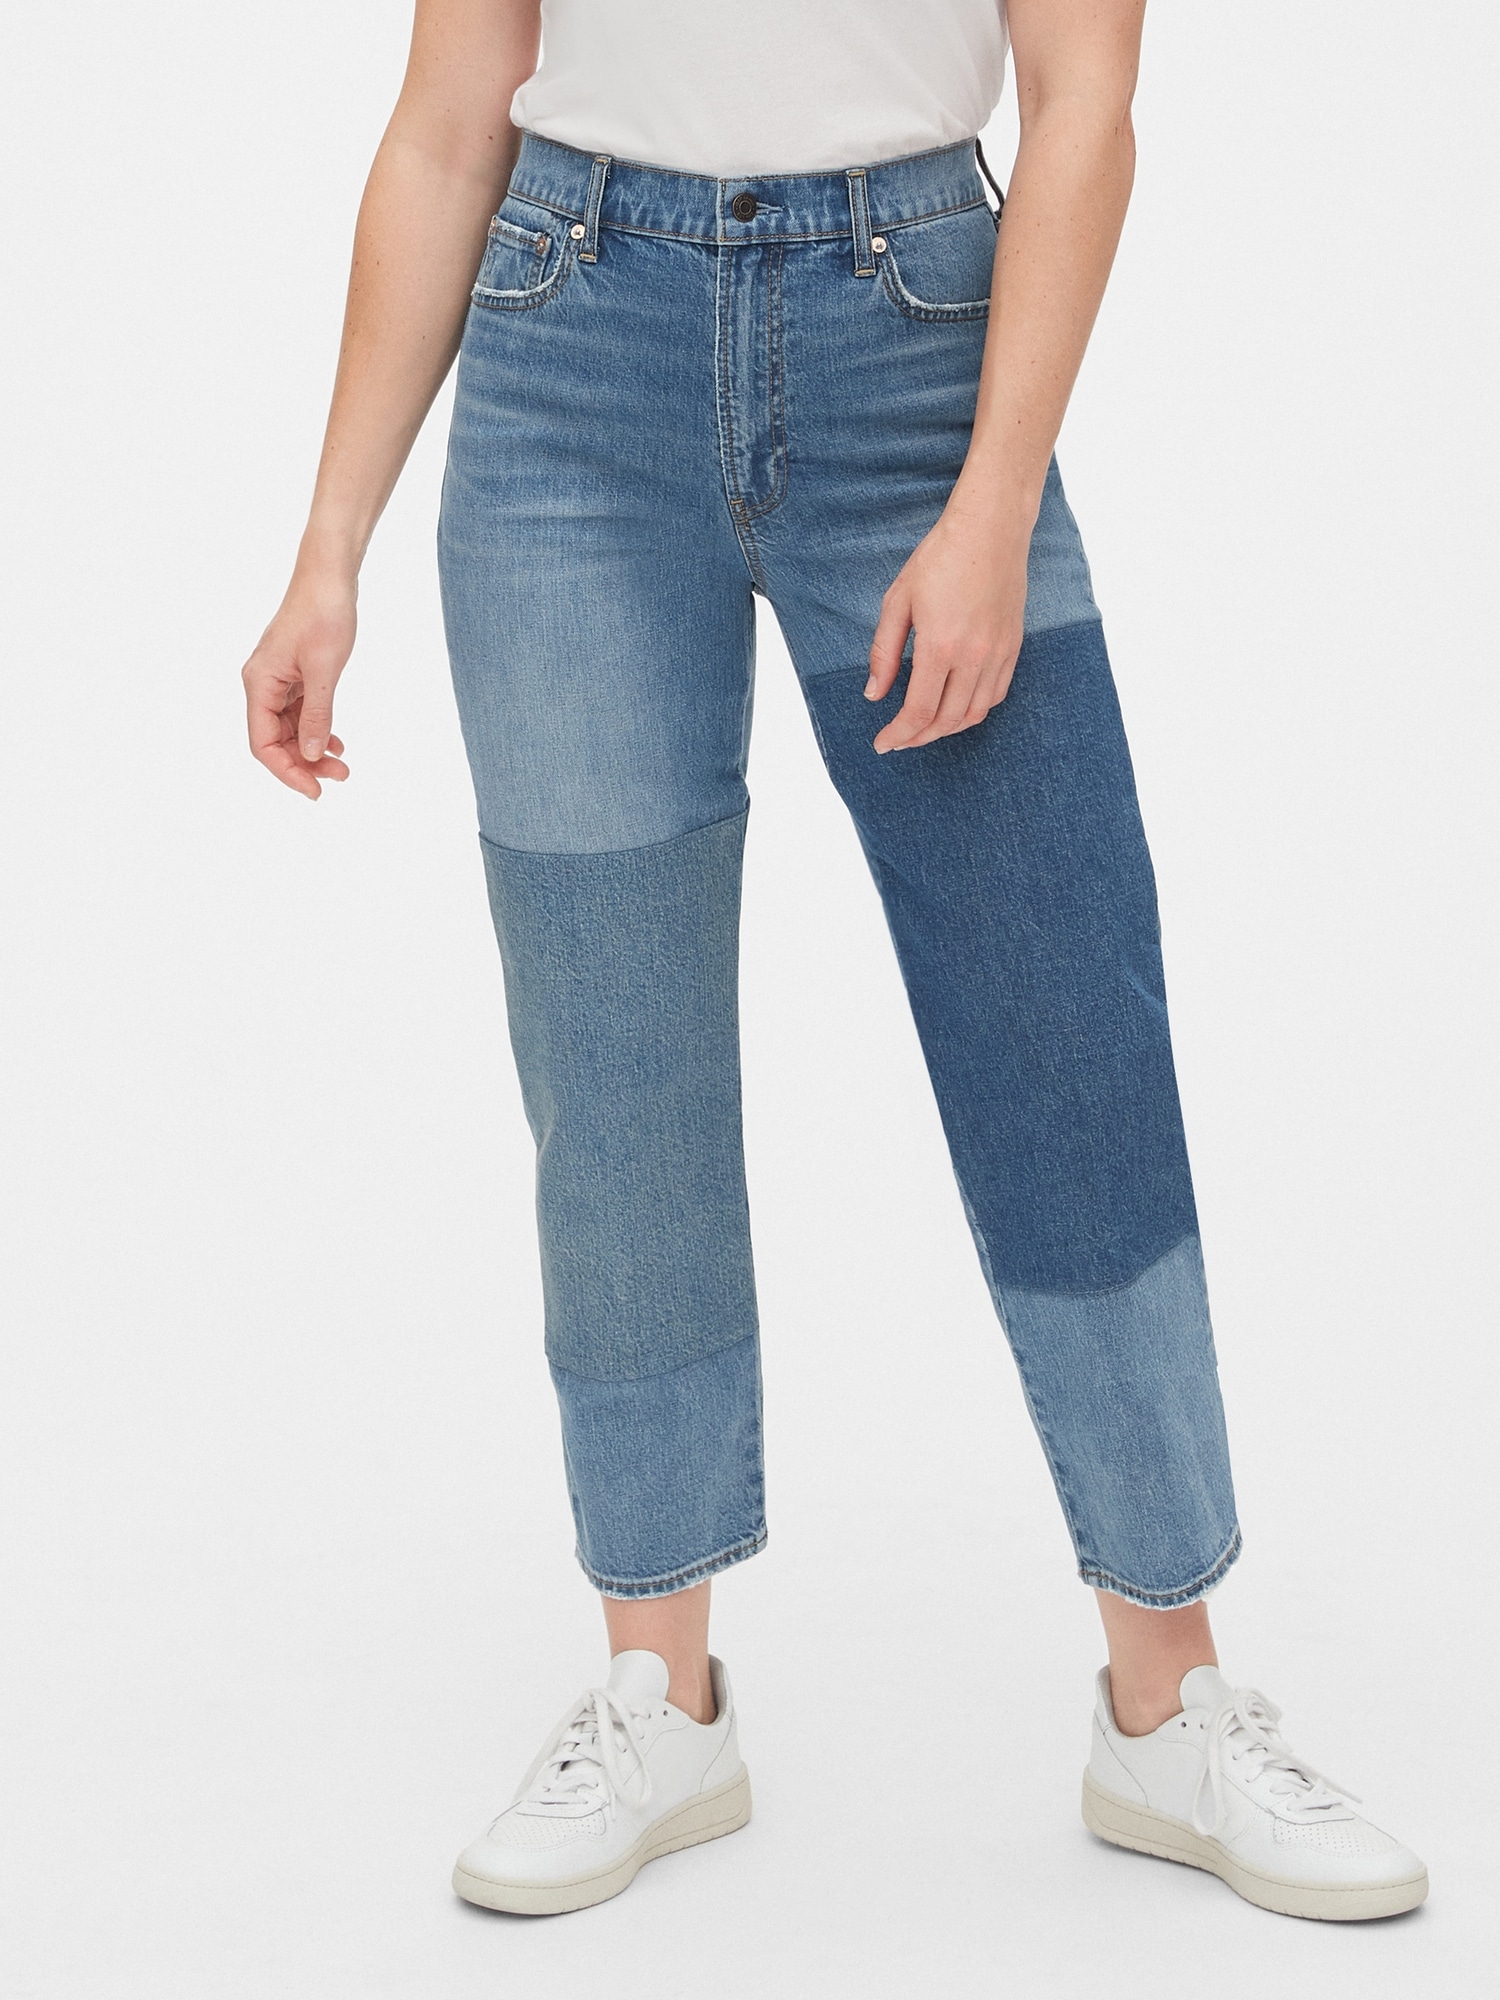 gap cheeky jeans